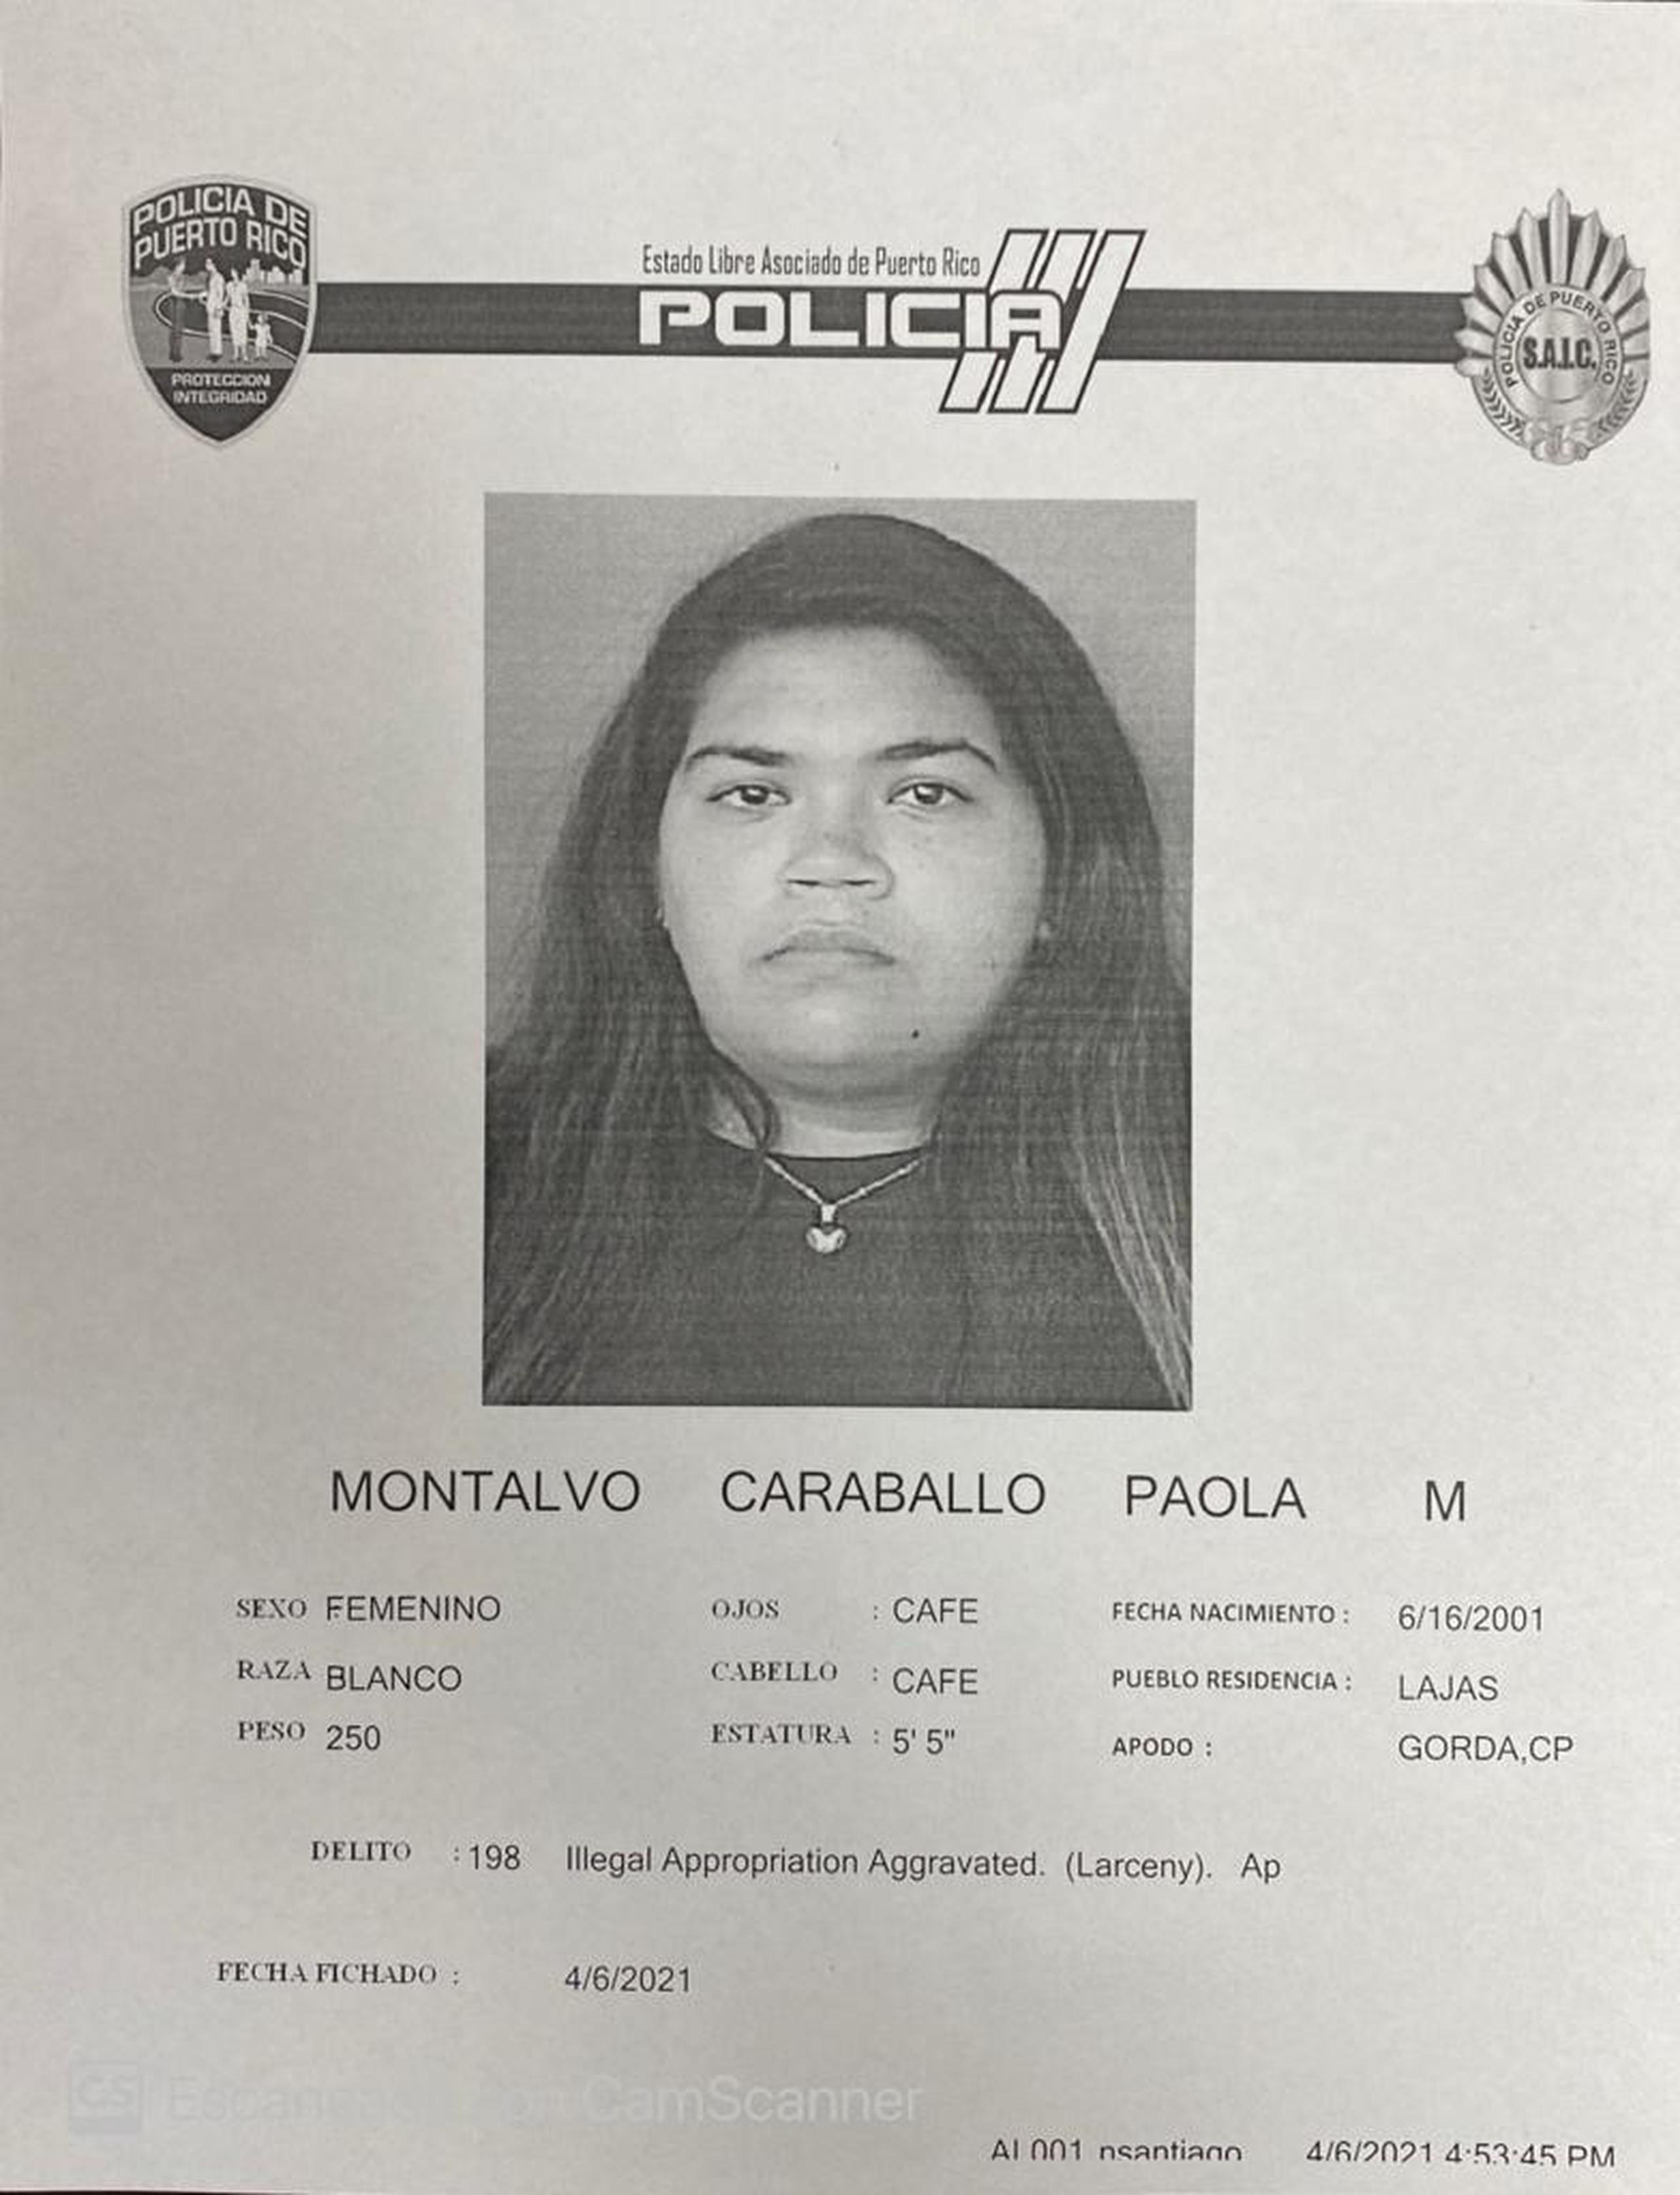 Ficha policíaca de la imputada, Paola M. Montalvo Caraballo.